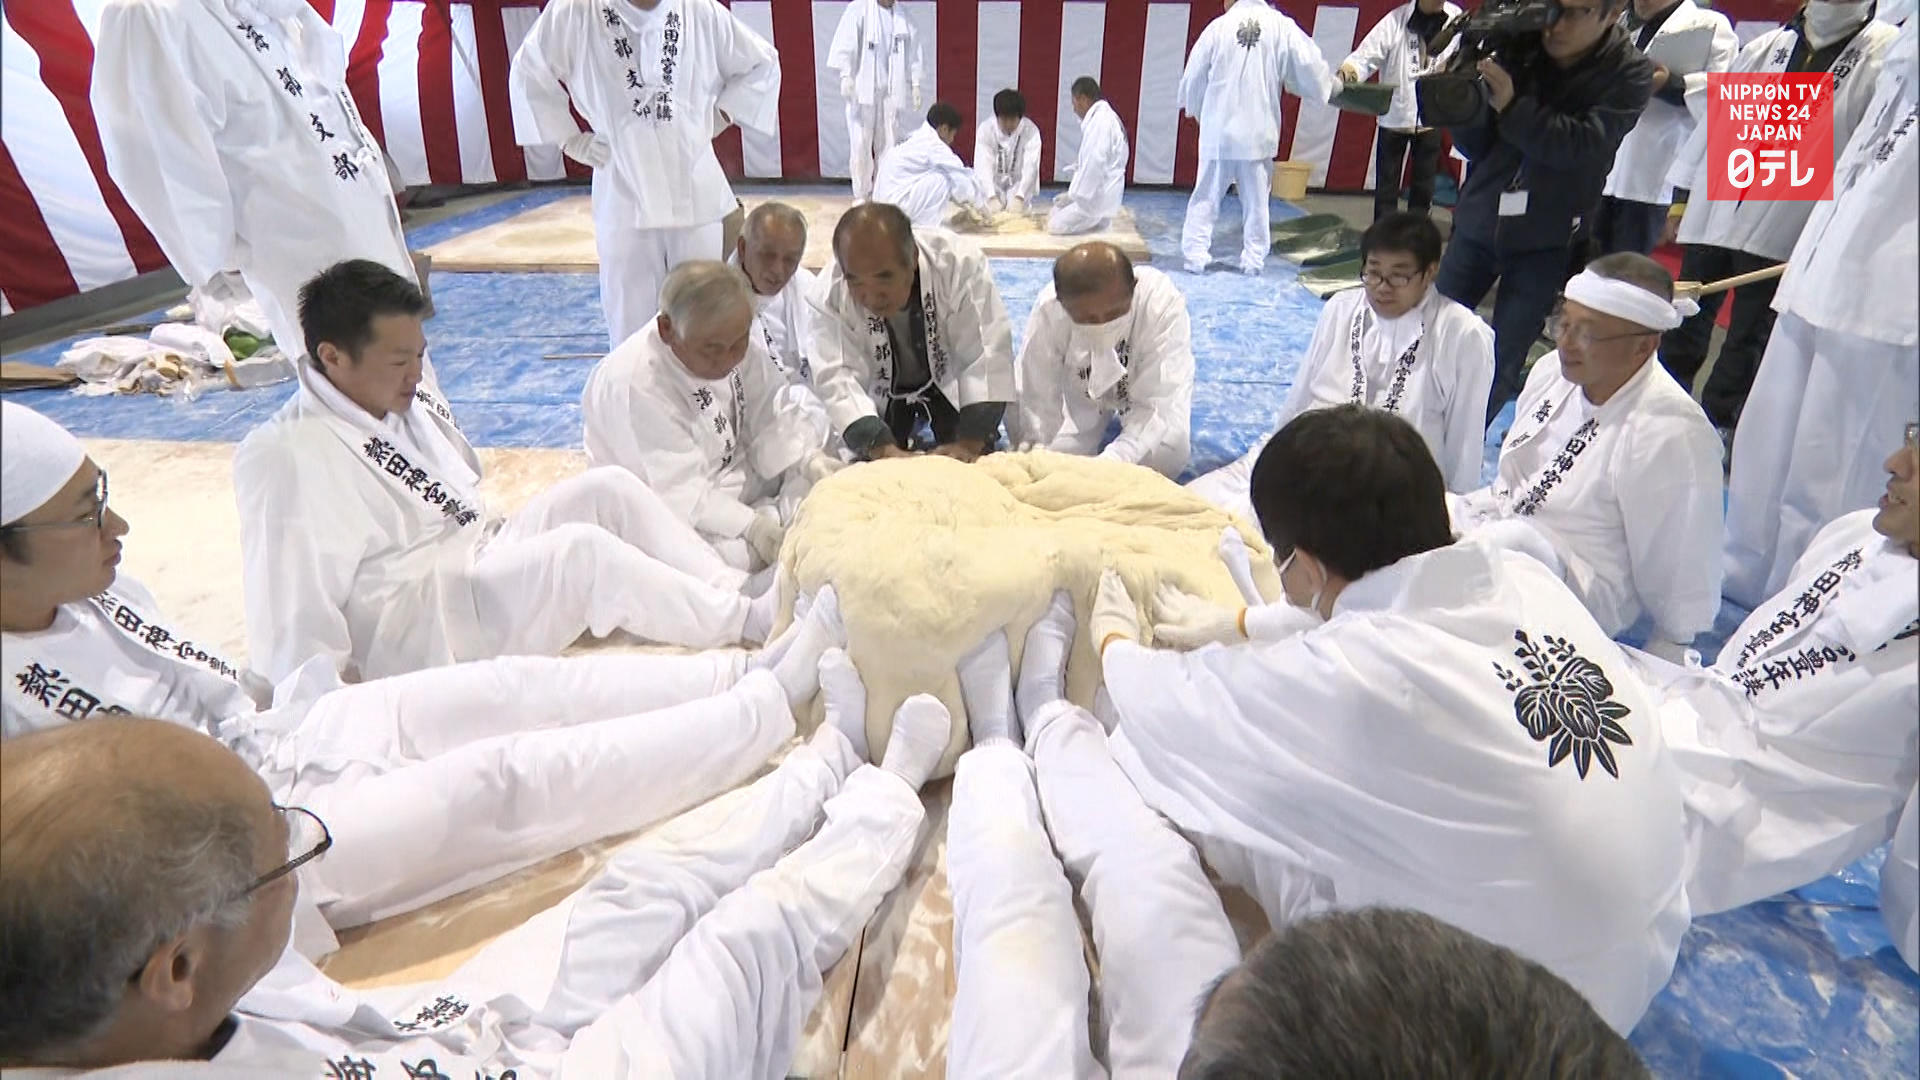 Giant rice cake making for deities